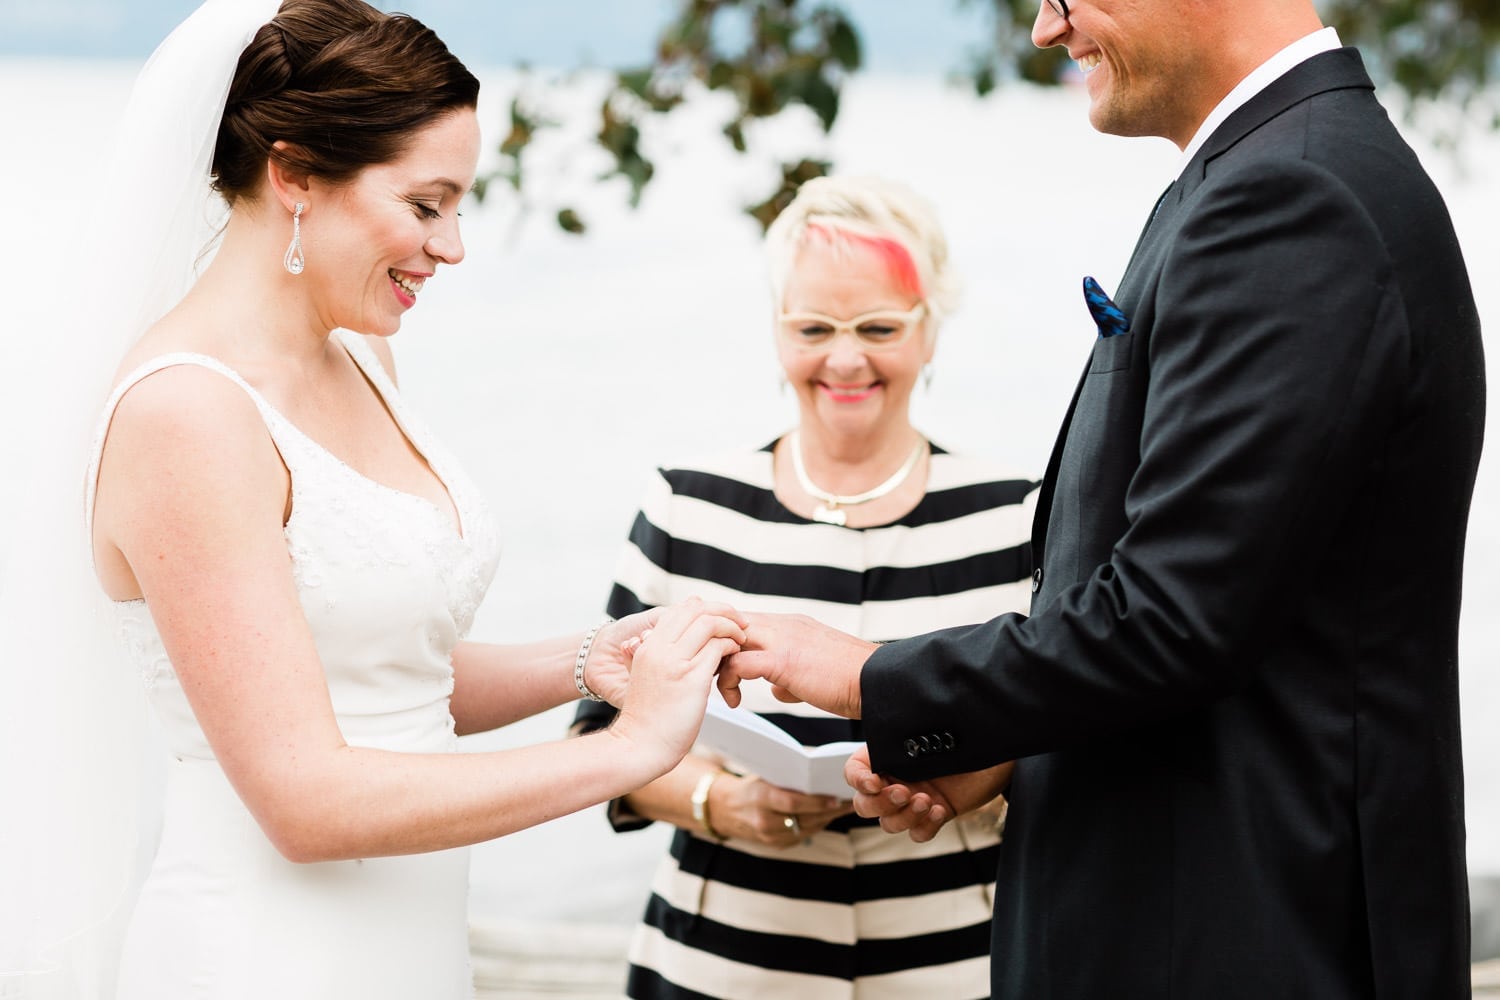 Wedding ceremony on Spanish banks | Vancouver wedding photographer